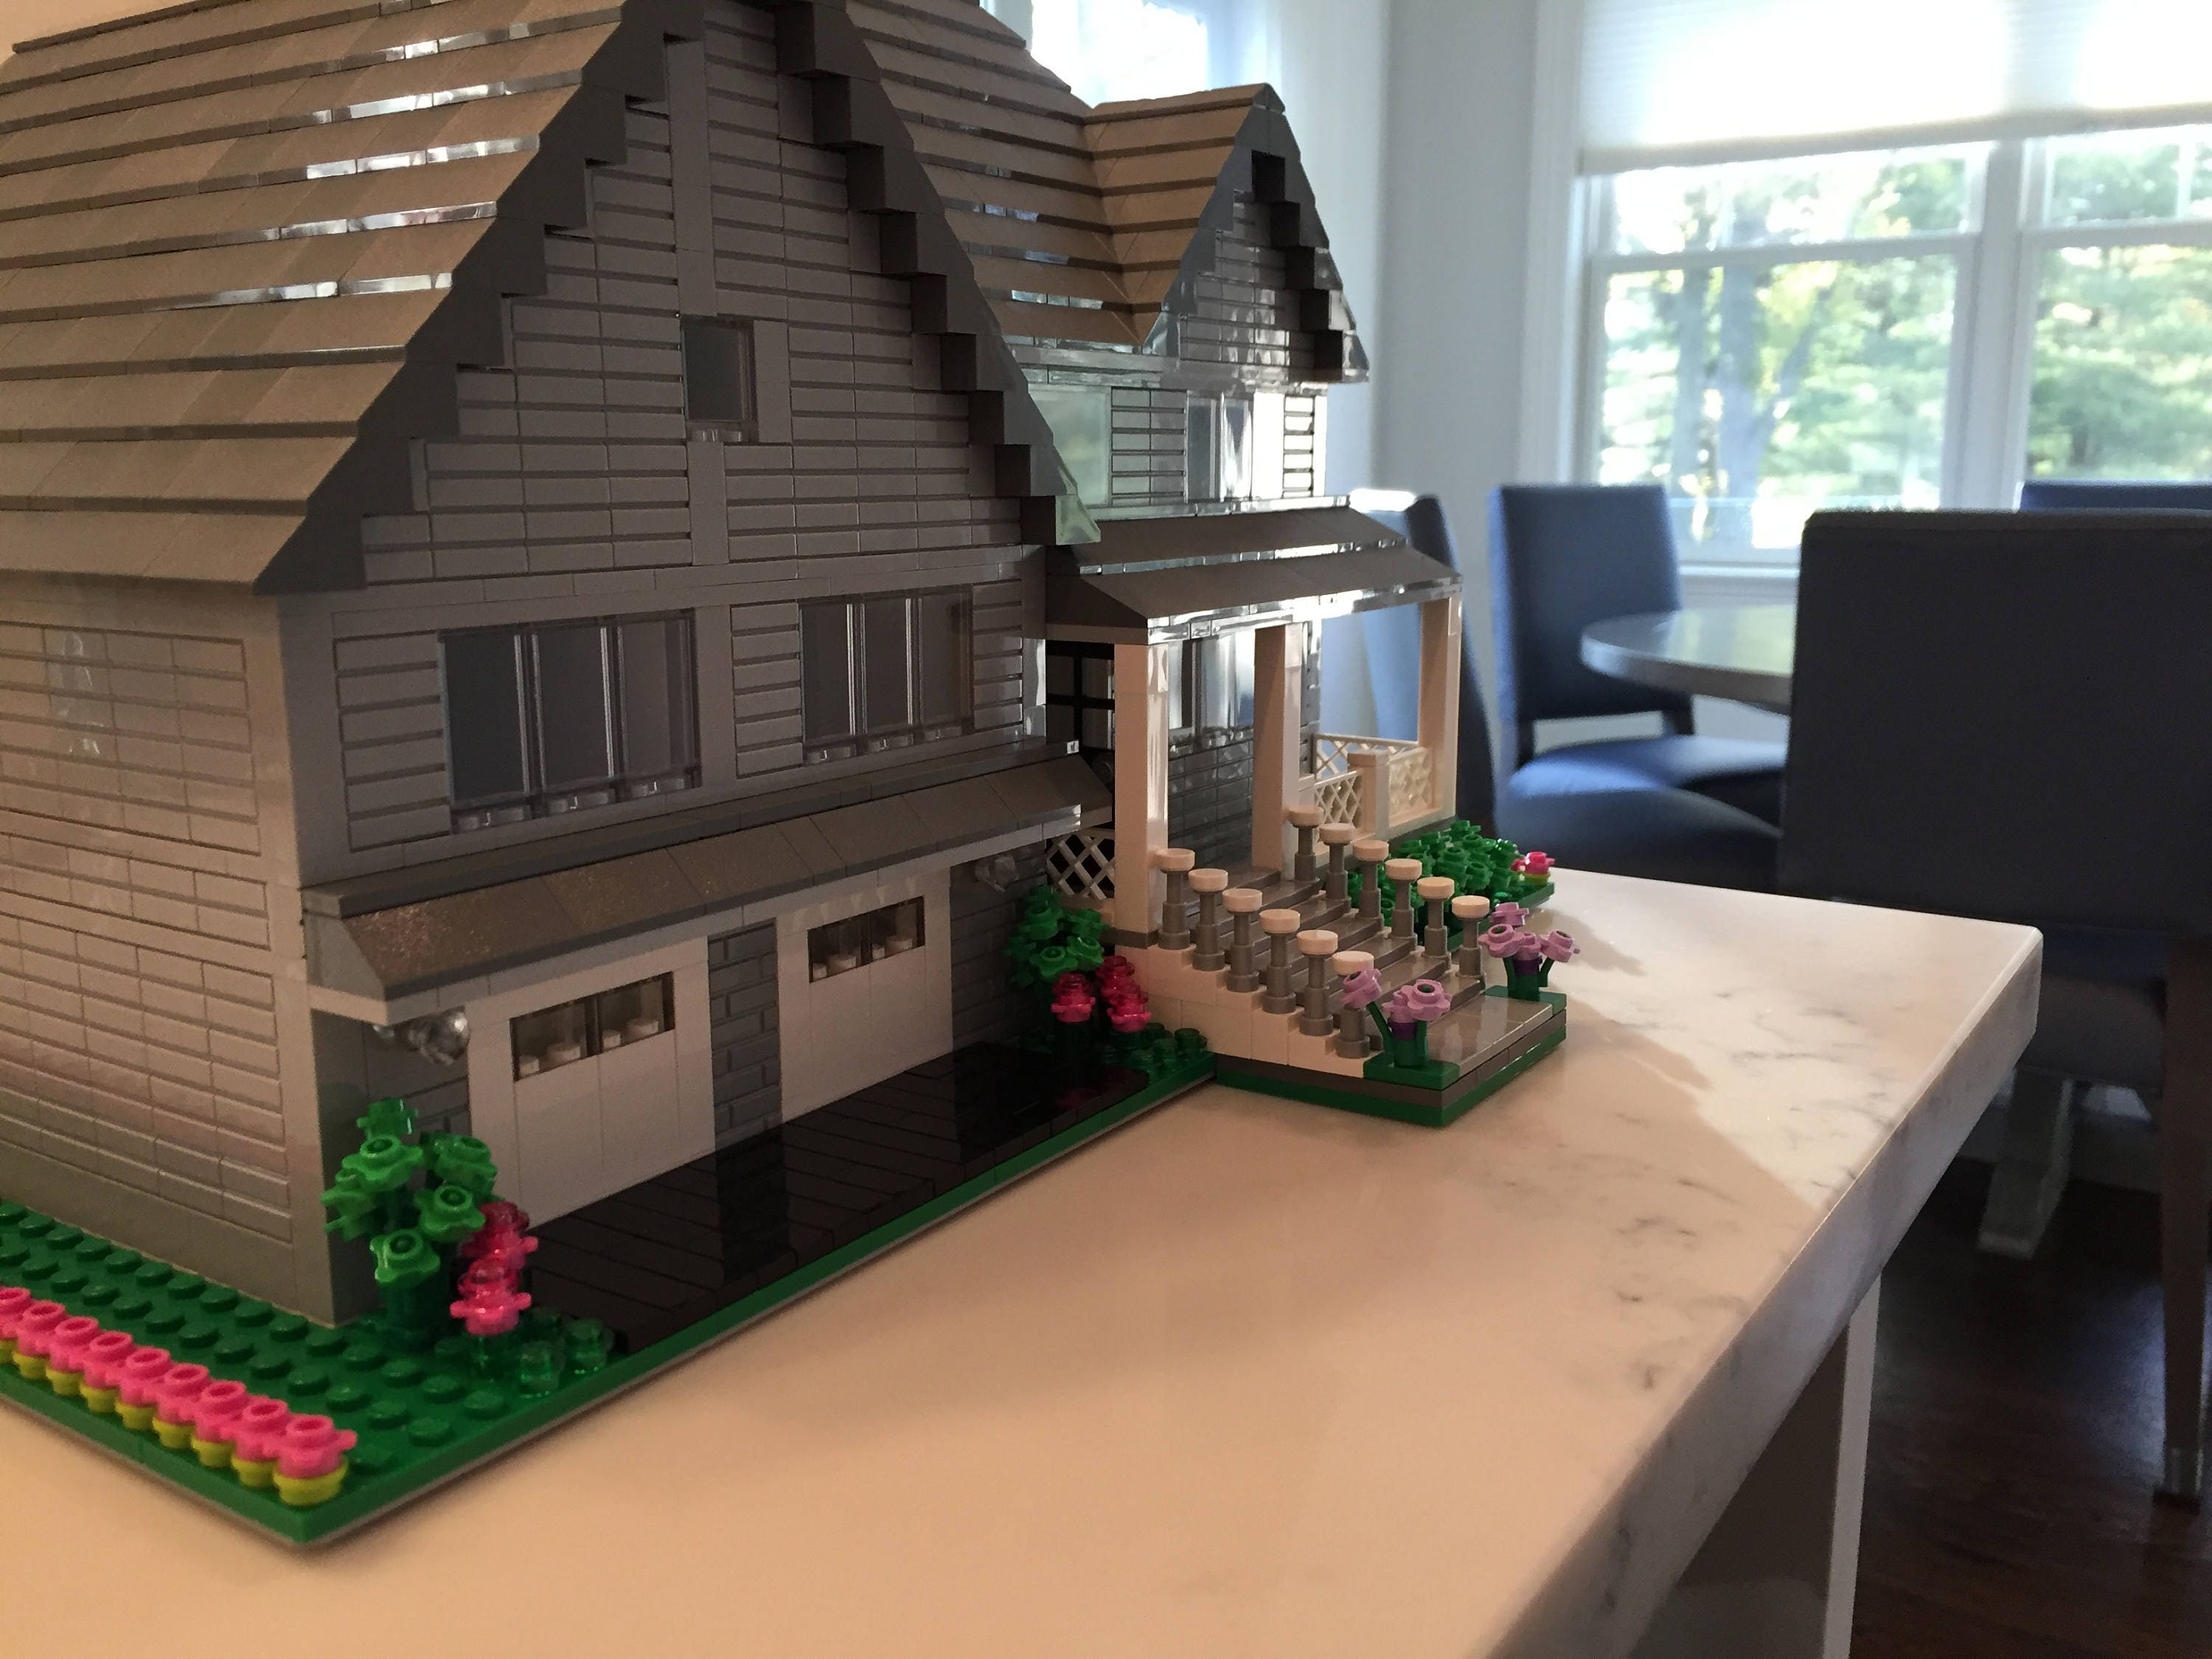 Lego Model Home Exterior Detail - Etsy